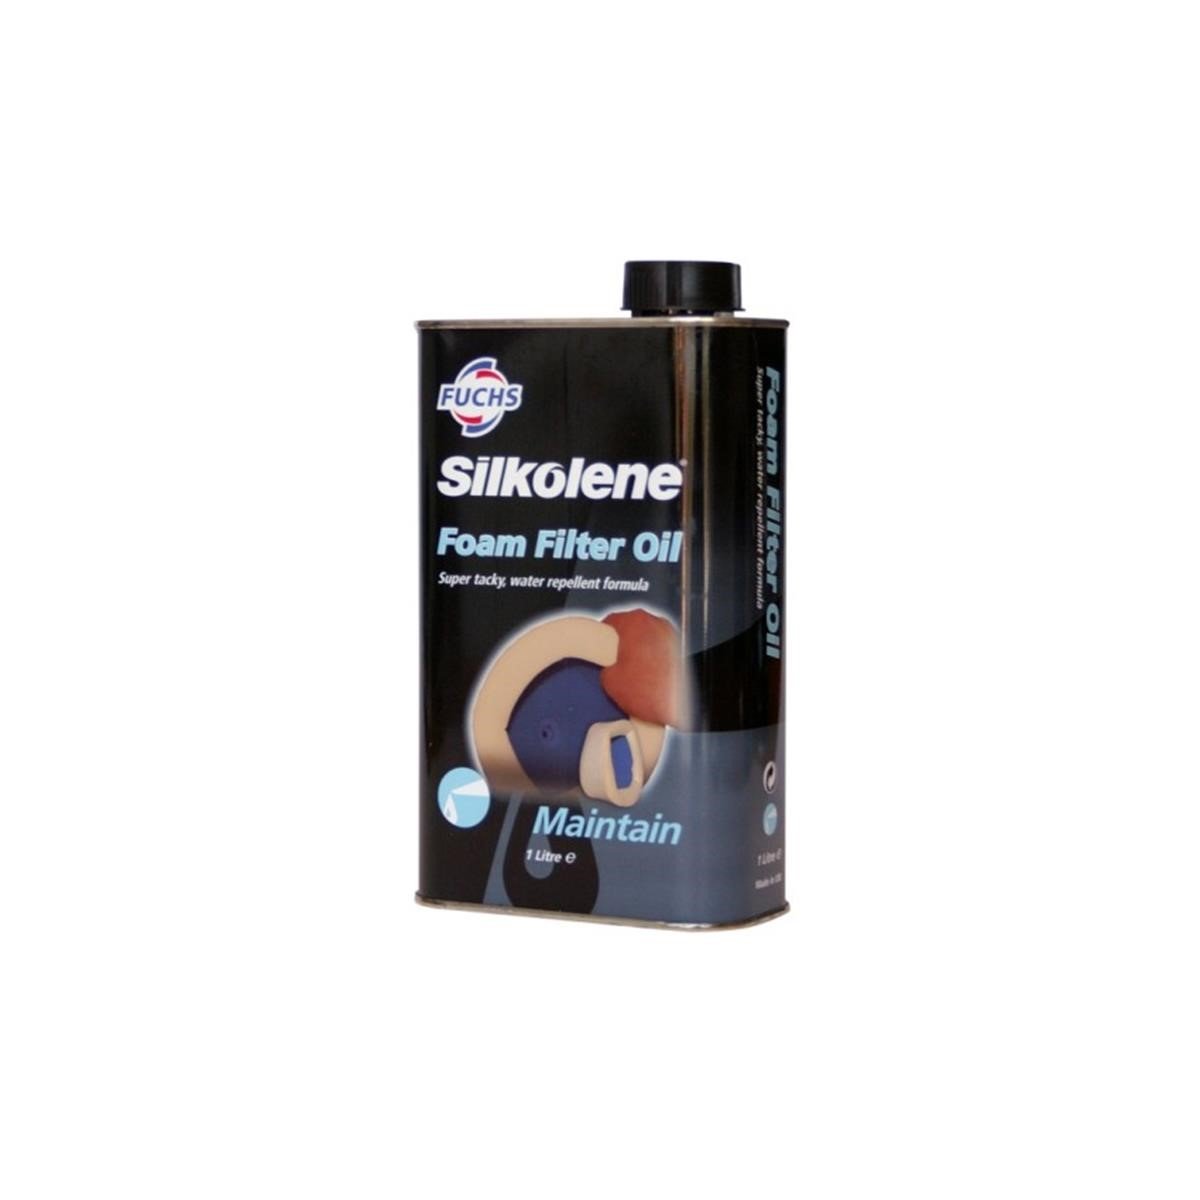 Fuchs Silkolene Air Filter Oil Foam Filter Oil 1 L